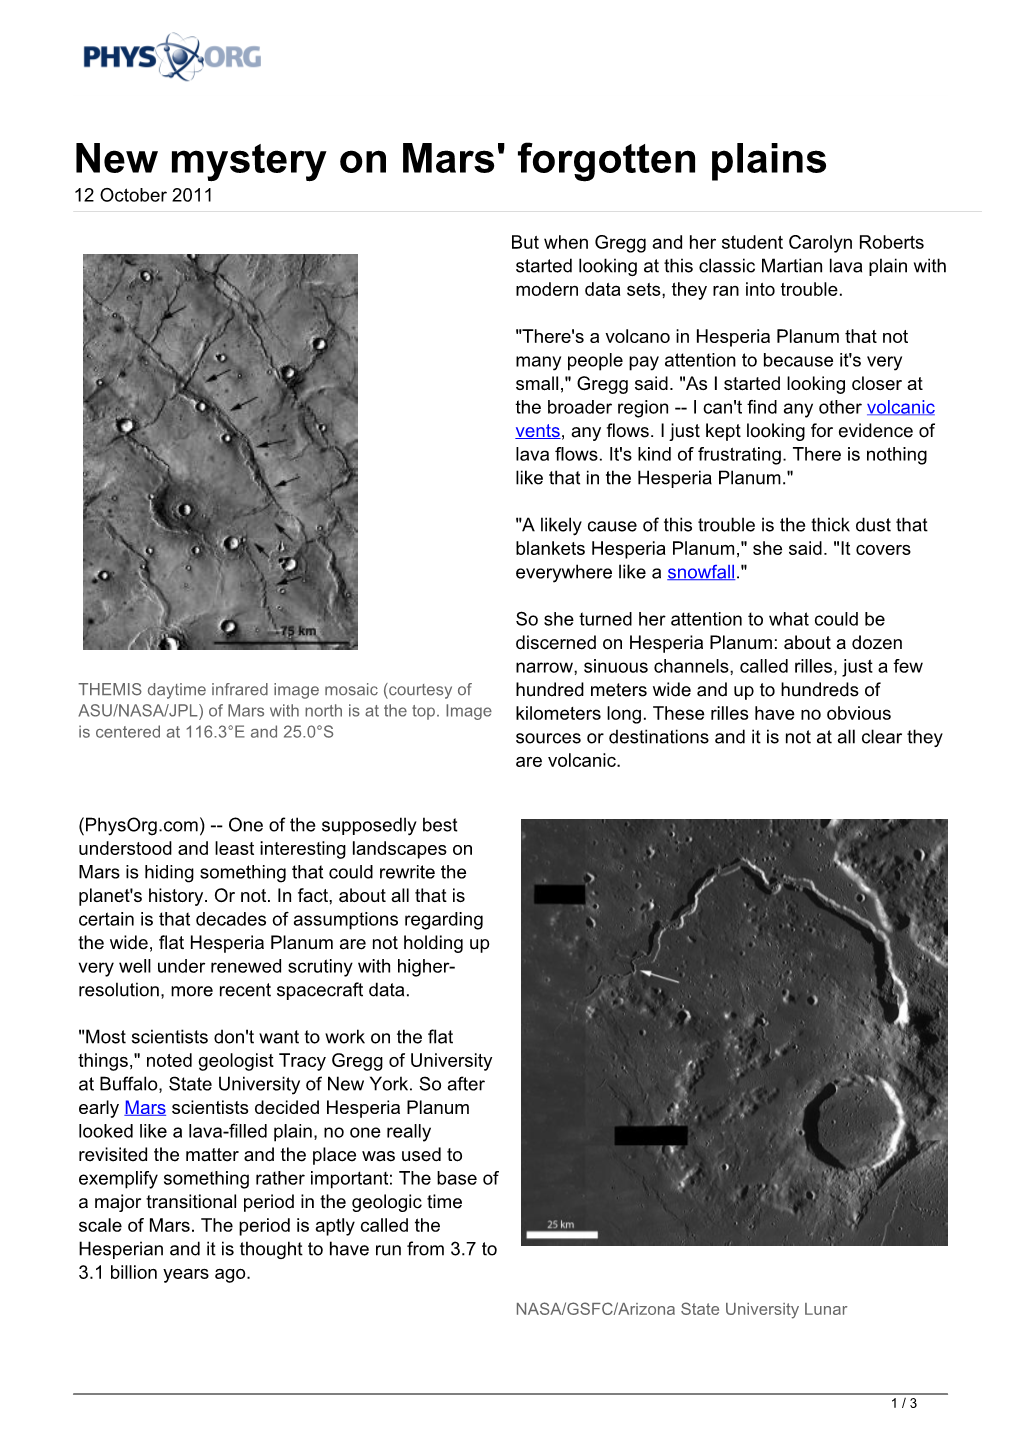 New Mystery on Mars' Forgotten Plains 12 October 2011